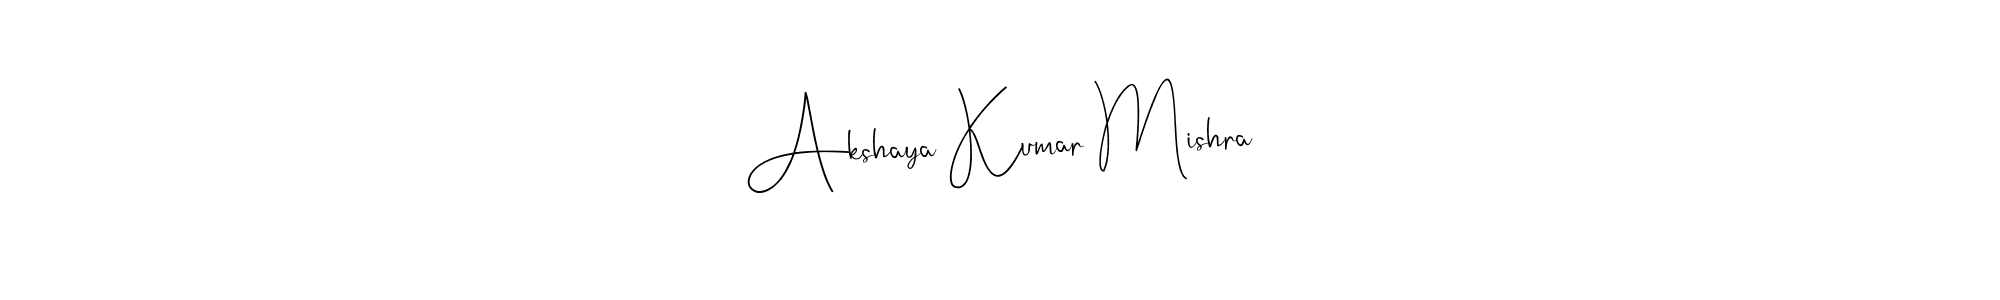 How to Draw Akshaya Kumar Mishra signature style? Andilay-7BmLP is a latest design signature styles for name Akshaya Kumar Mishra. Akshaya Kumar Mishra signature style 4 images and pictures png